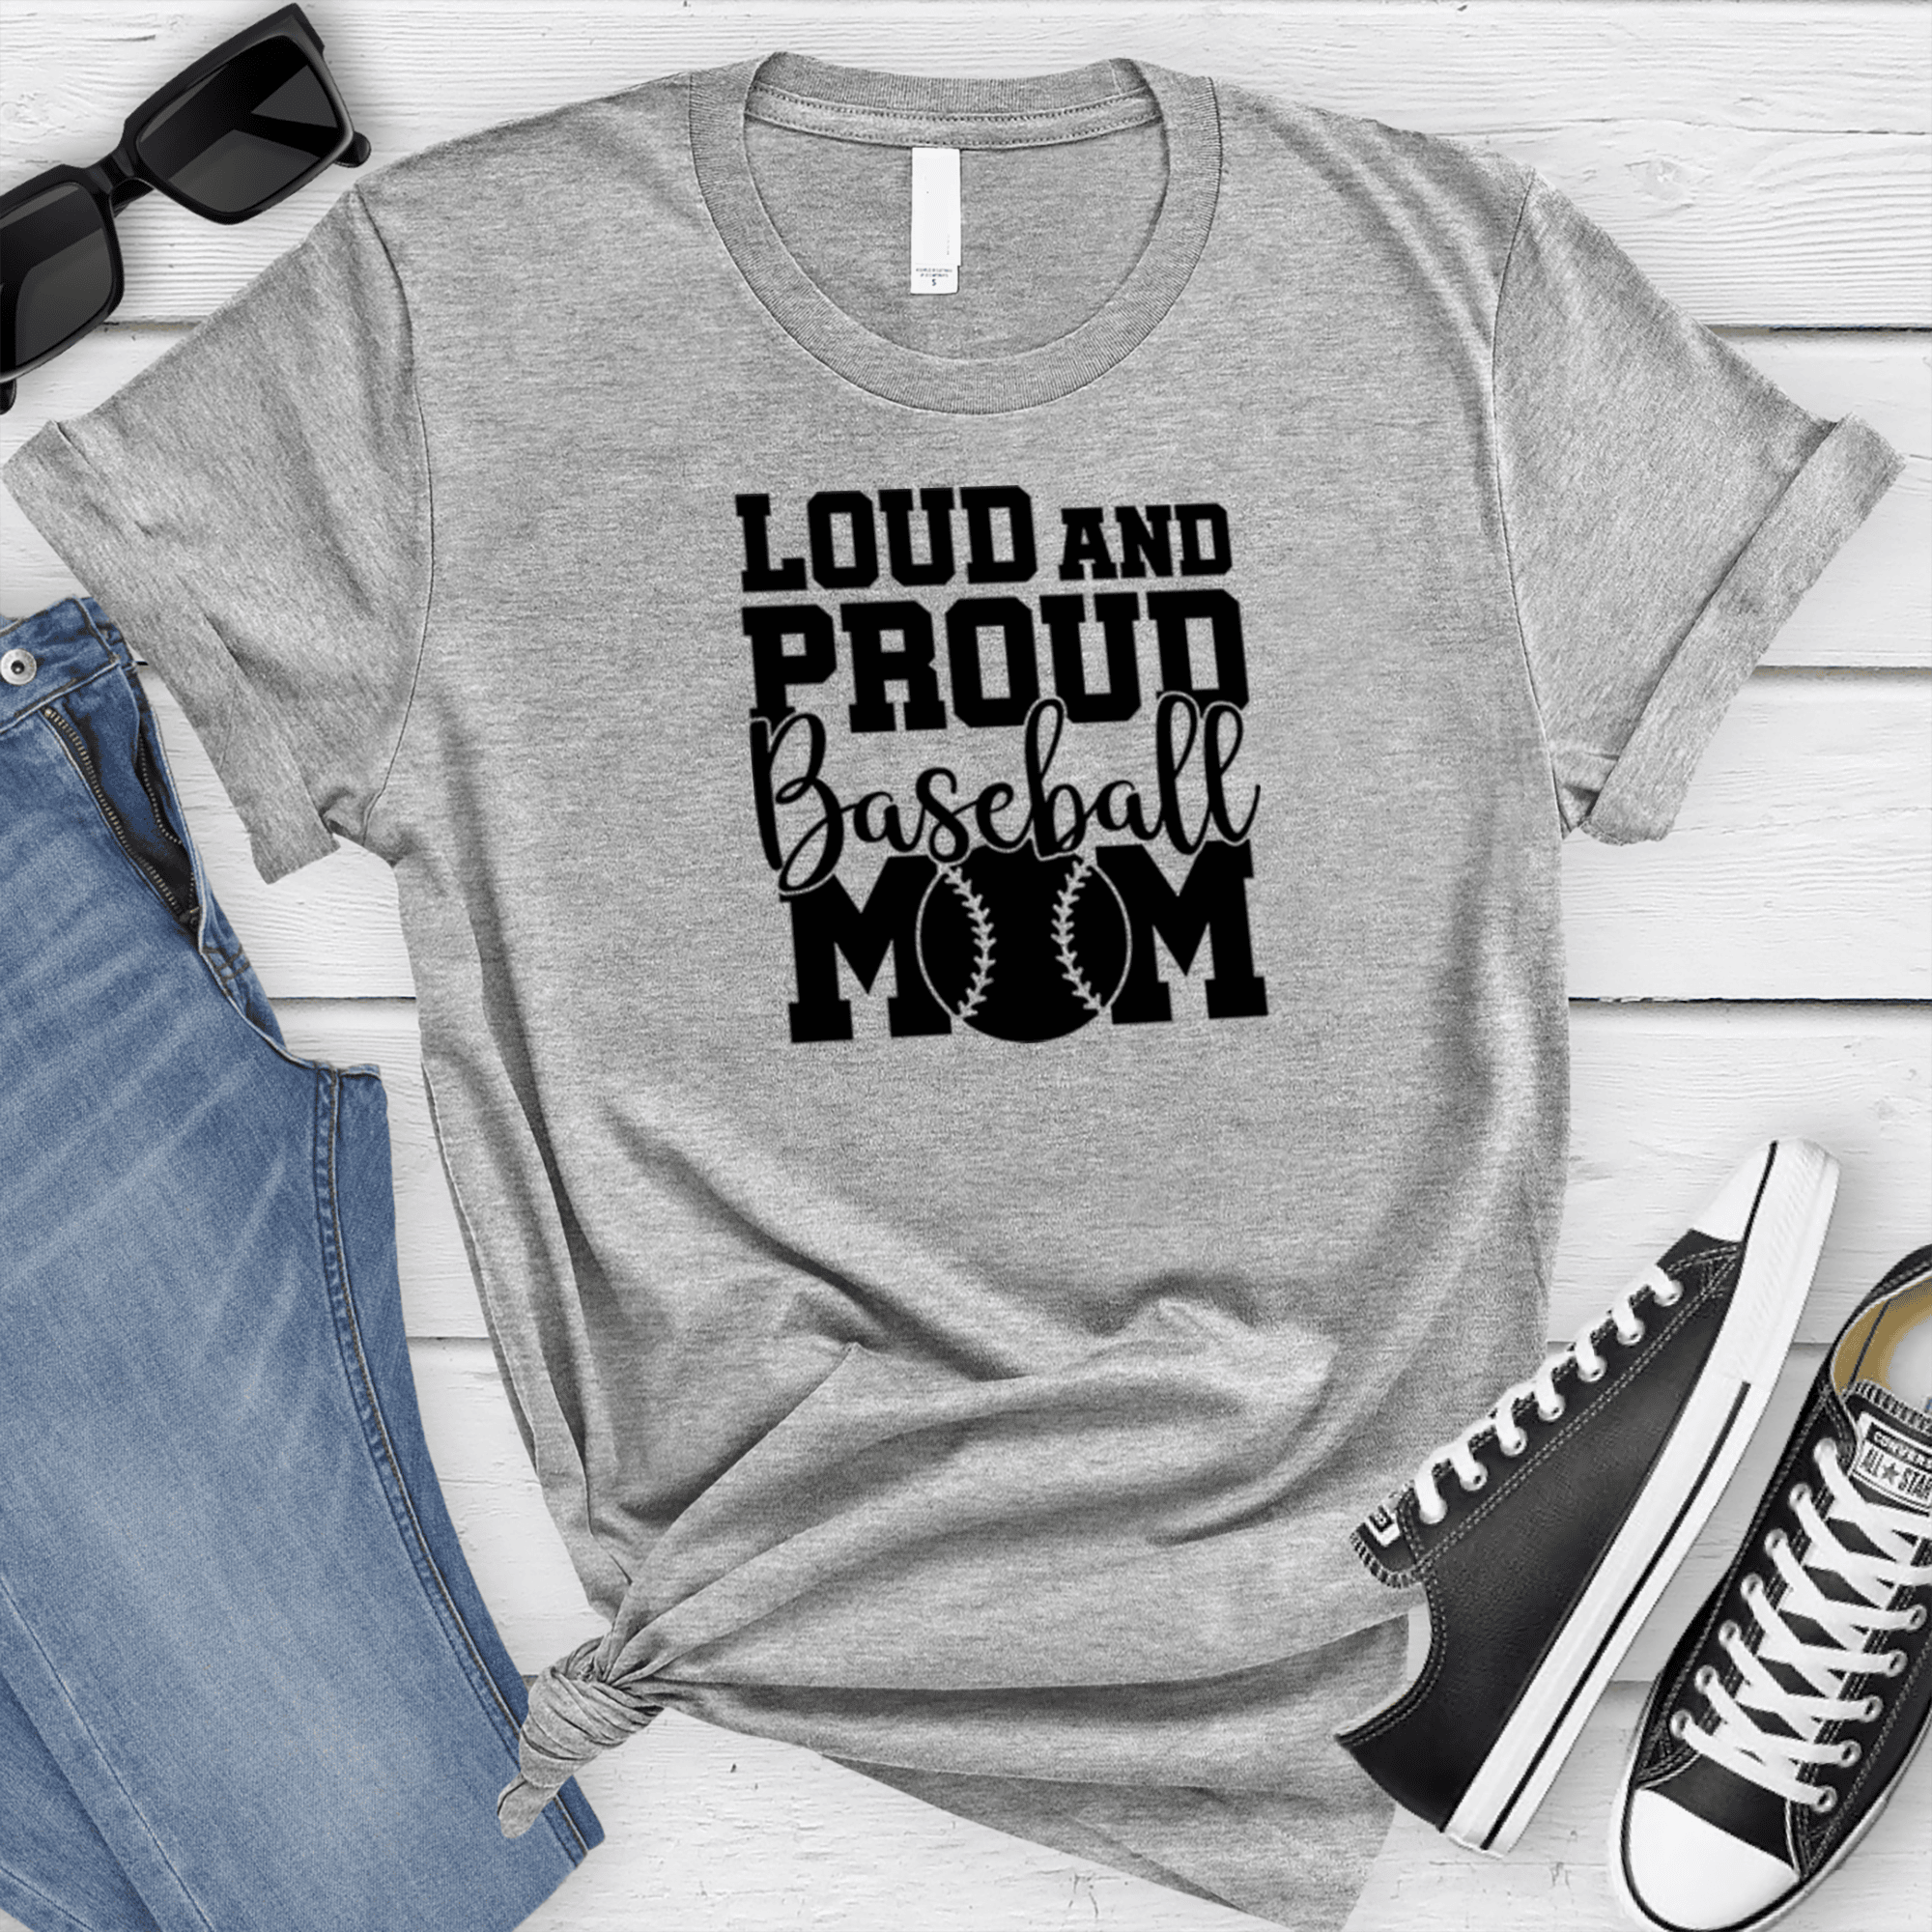 Womens Grey T Shirt with Loud-Baseball-Mom-Alert design